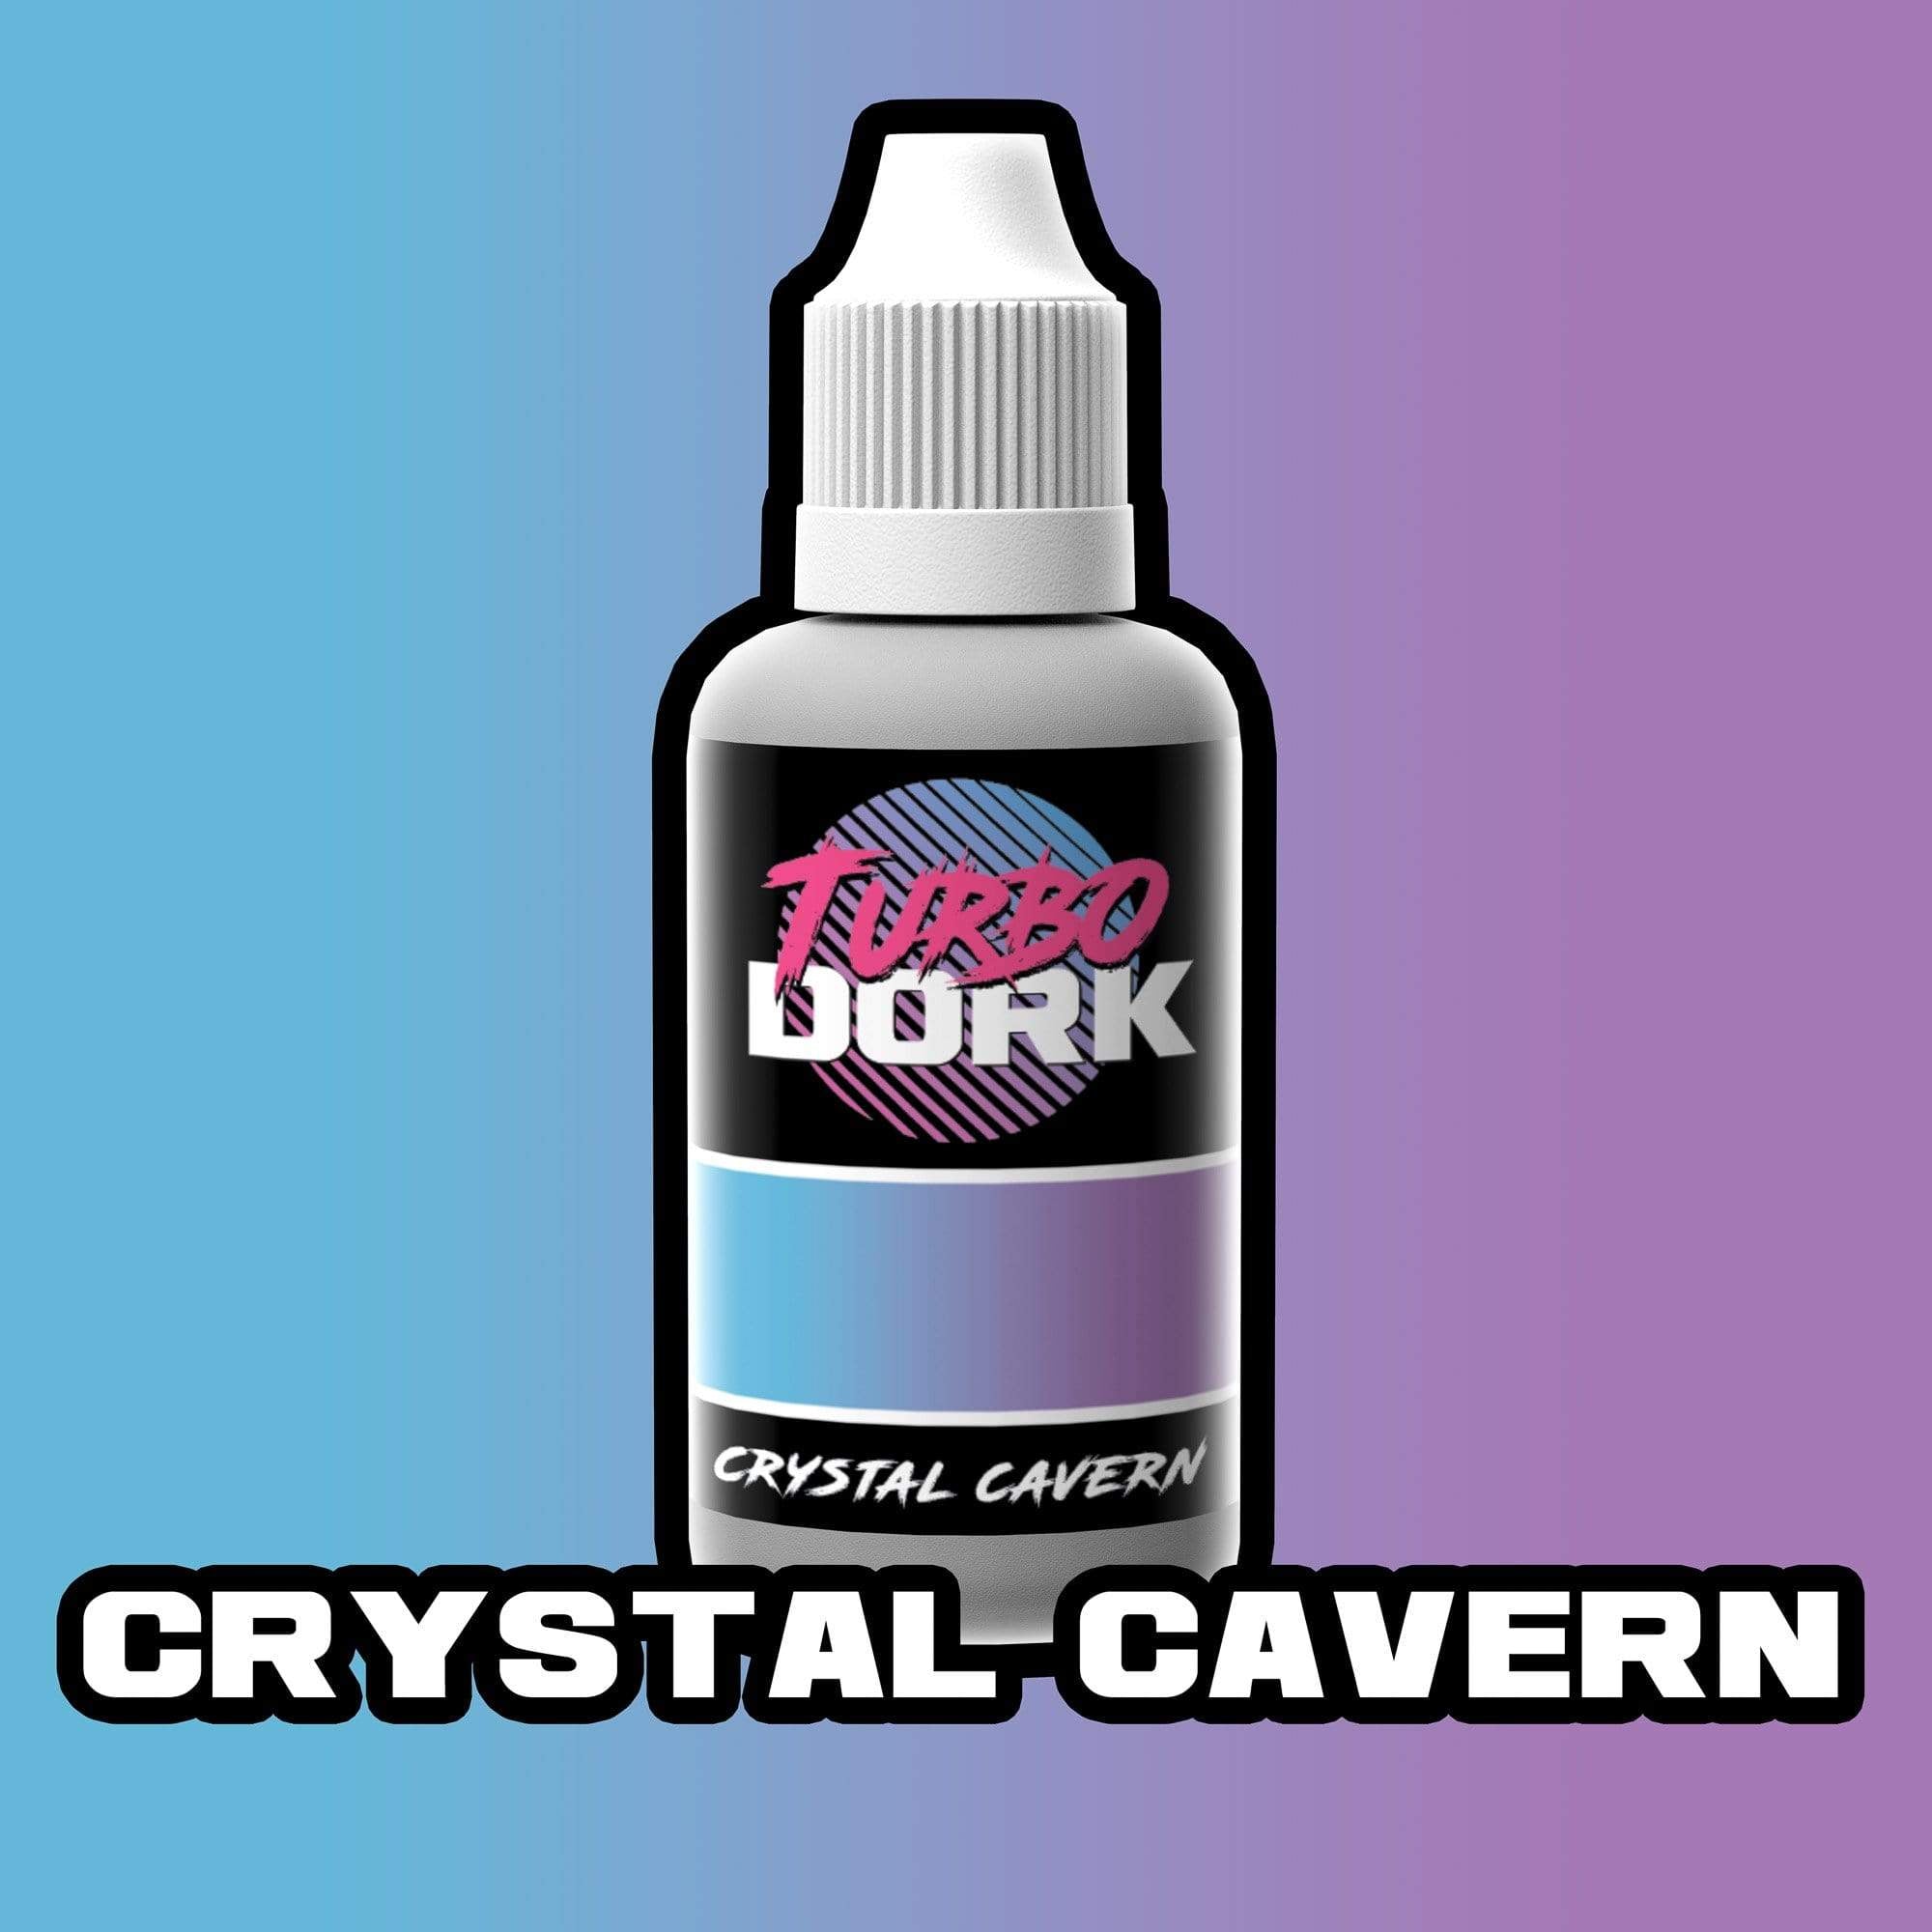 Crystal Cavern Colorshift Acrylic Paint Turboshift Turbo Dork Exit 23 Games Crystal Cavern Colorshift Acrylic Paint